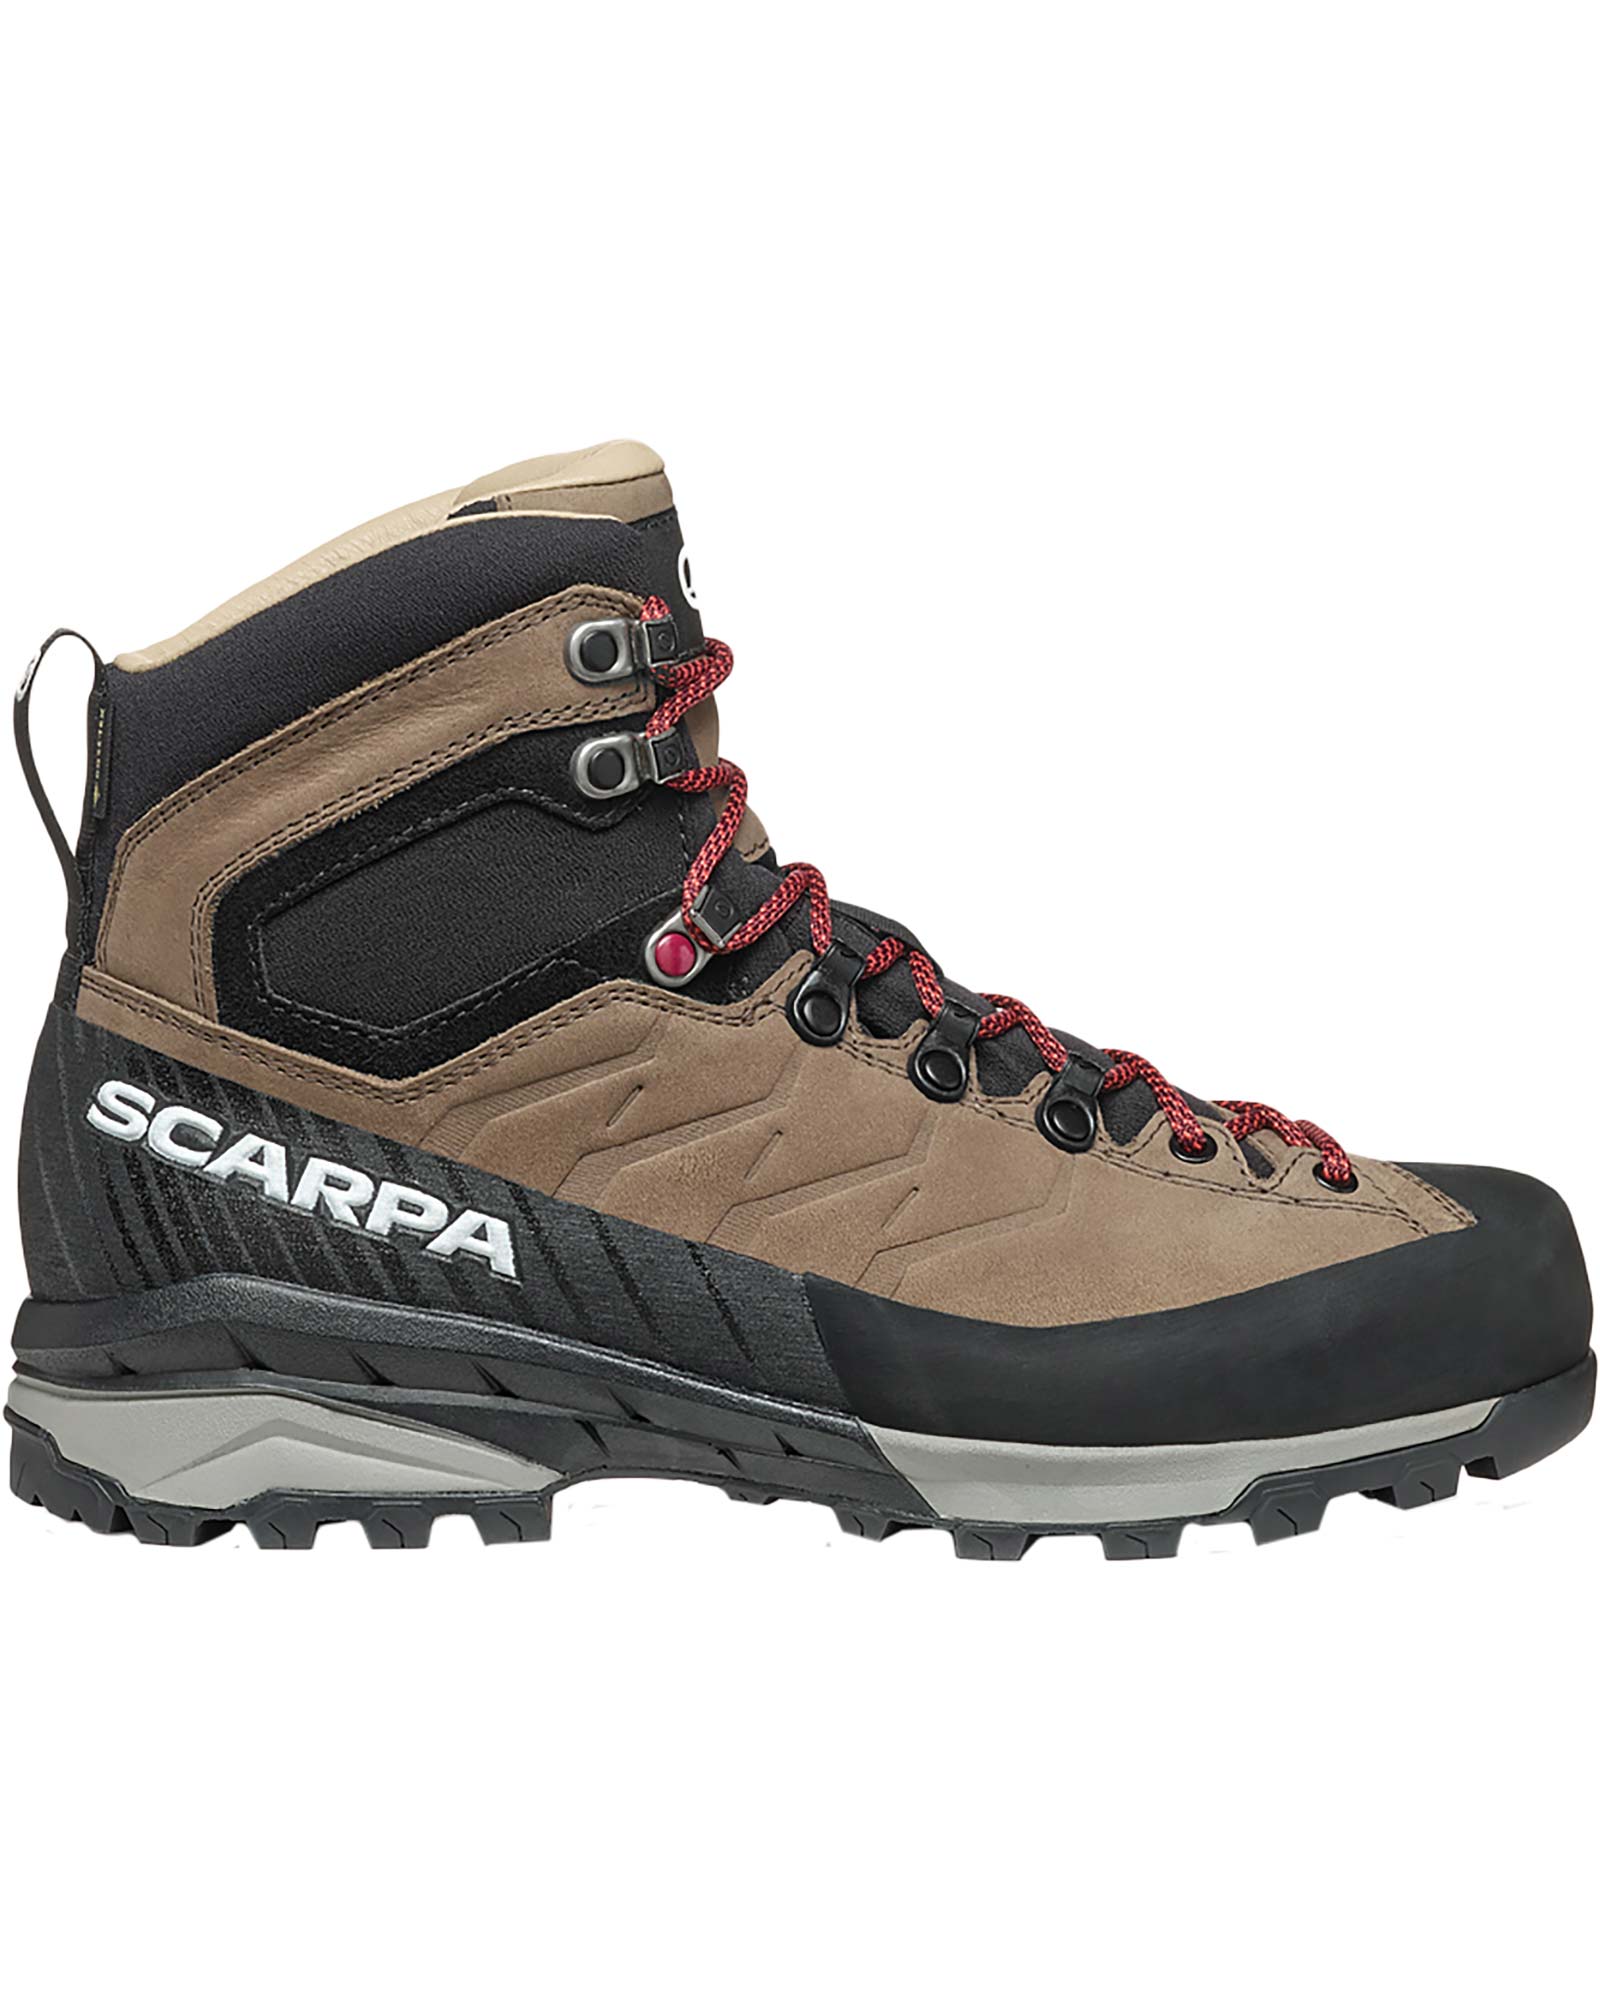 Scarpa Mescalito TRK Pro GORE TEX Women’s Boots - Charcoal Grey/Raspberry EU 41